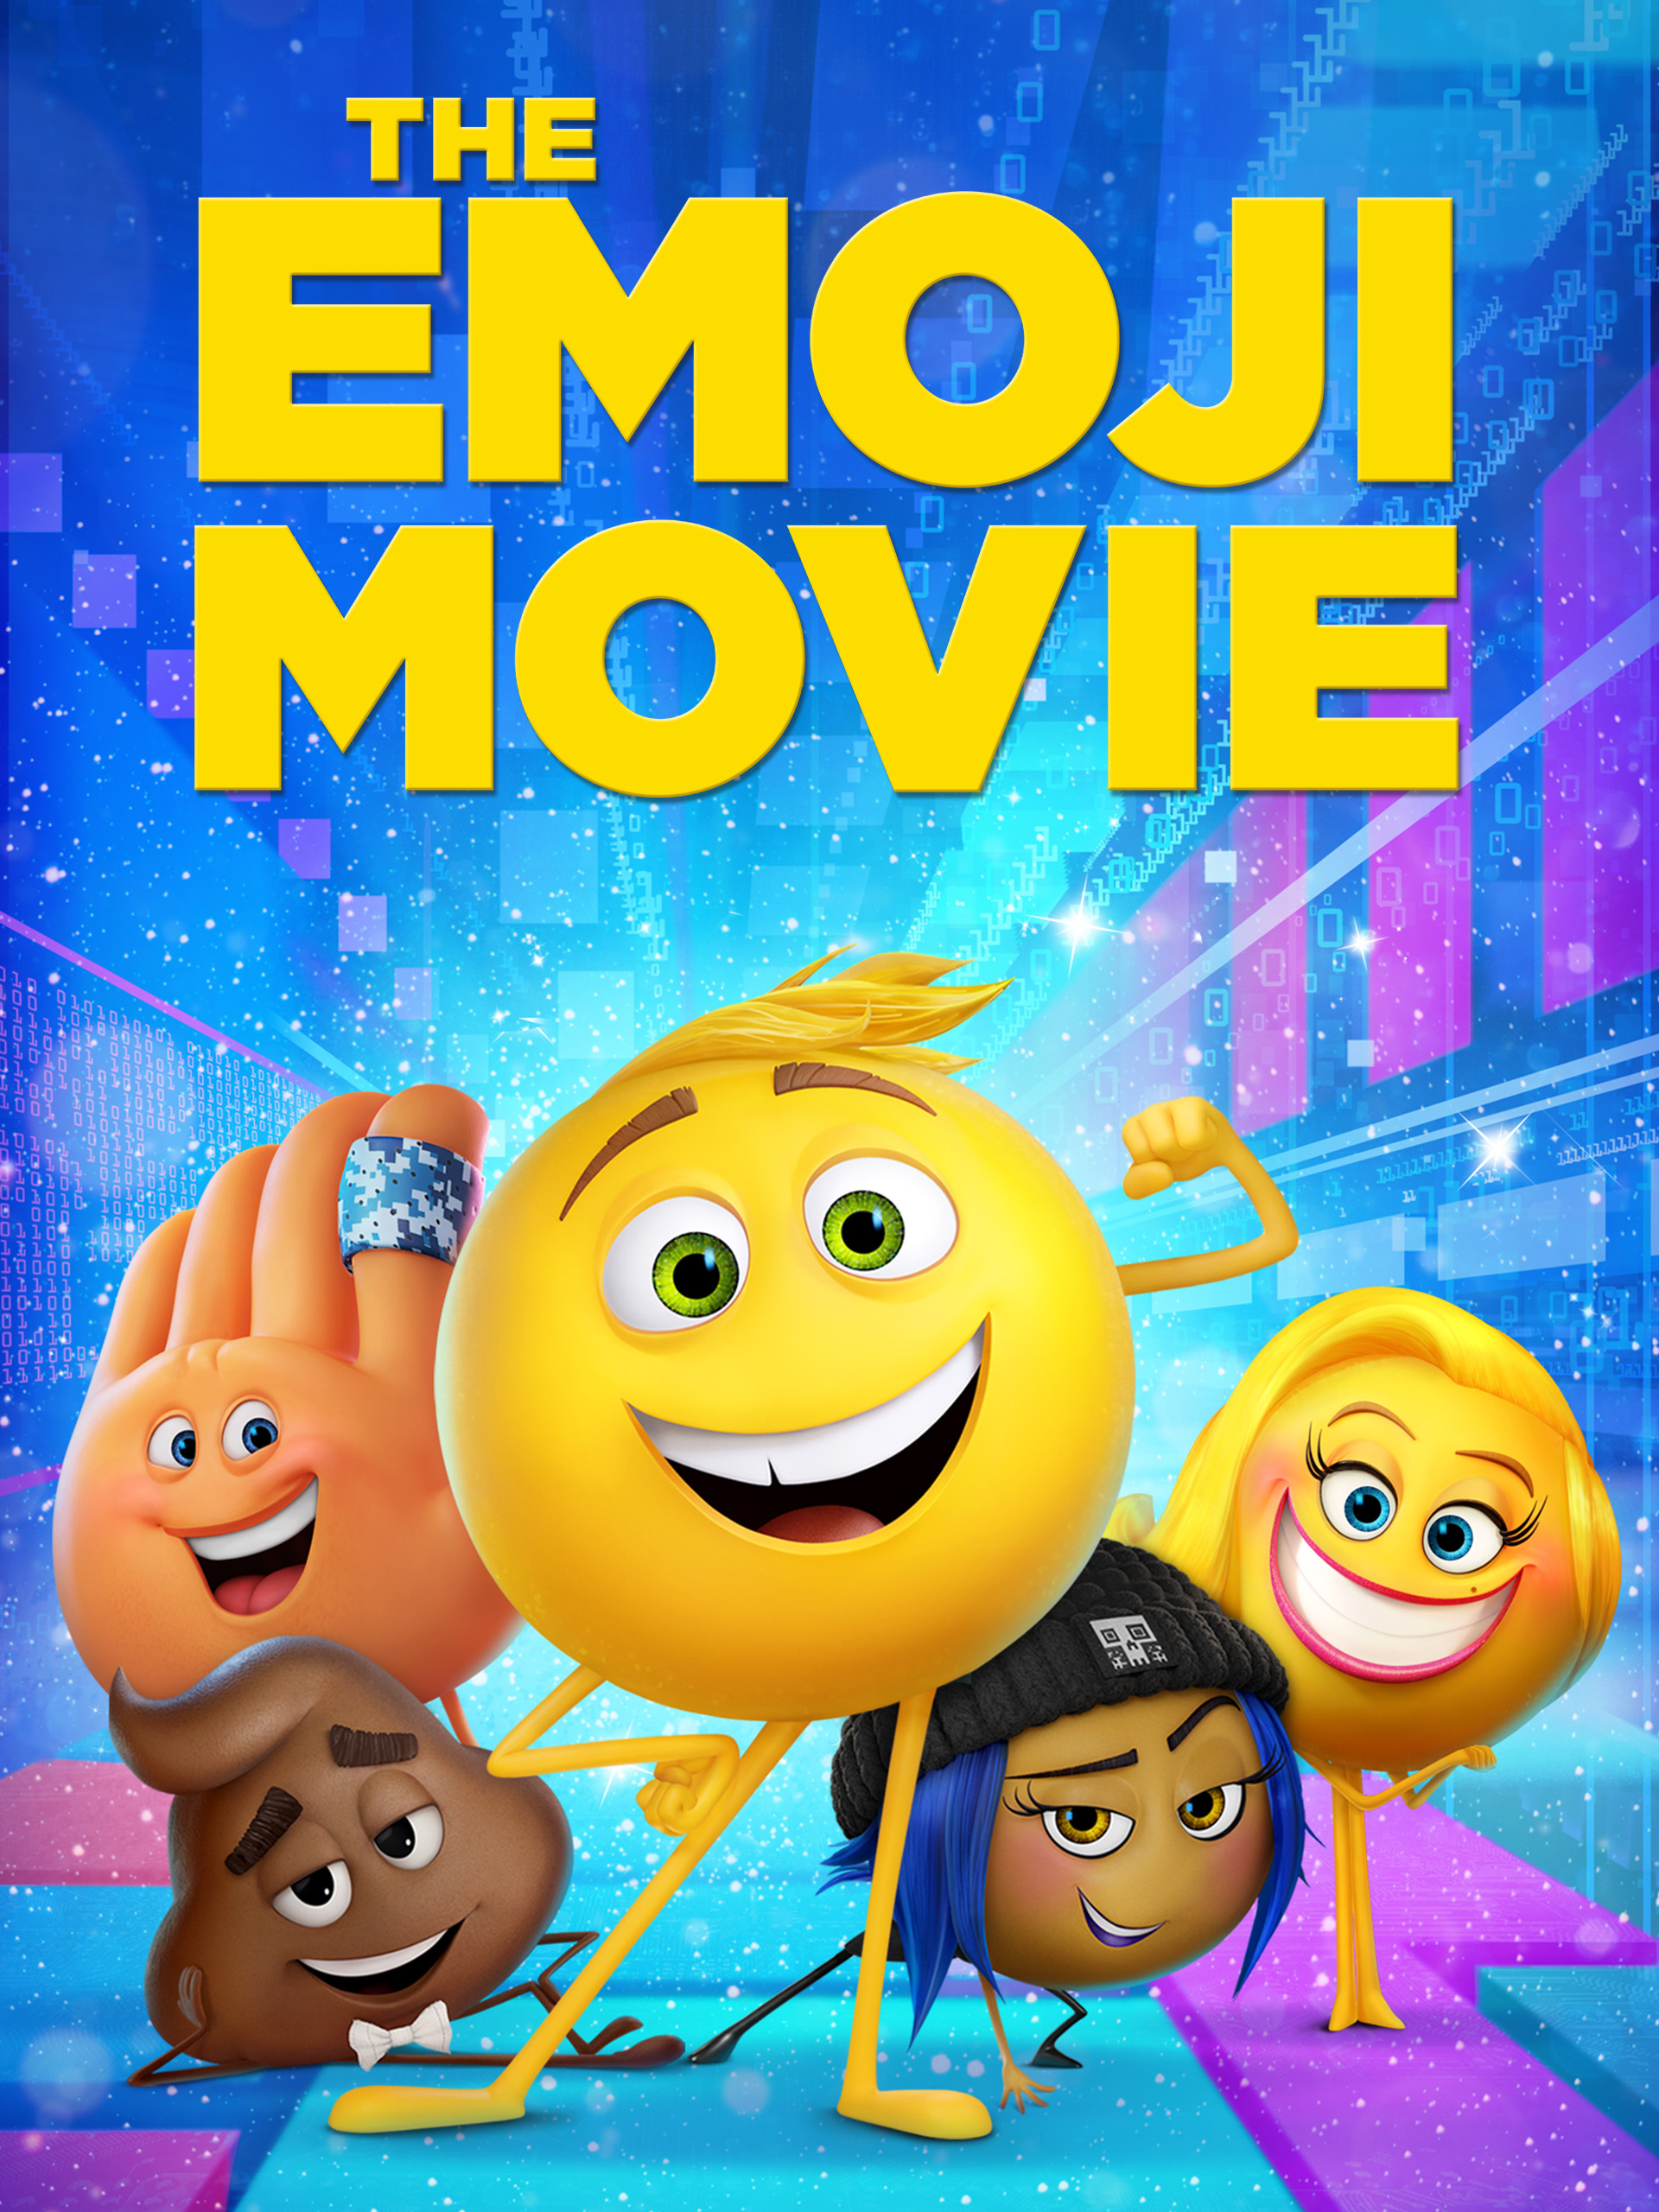 world emoji day - the movie